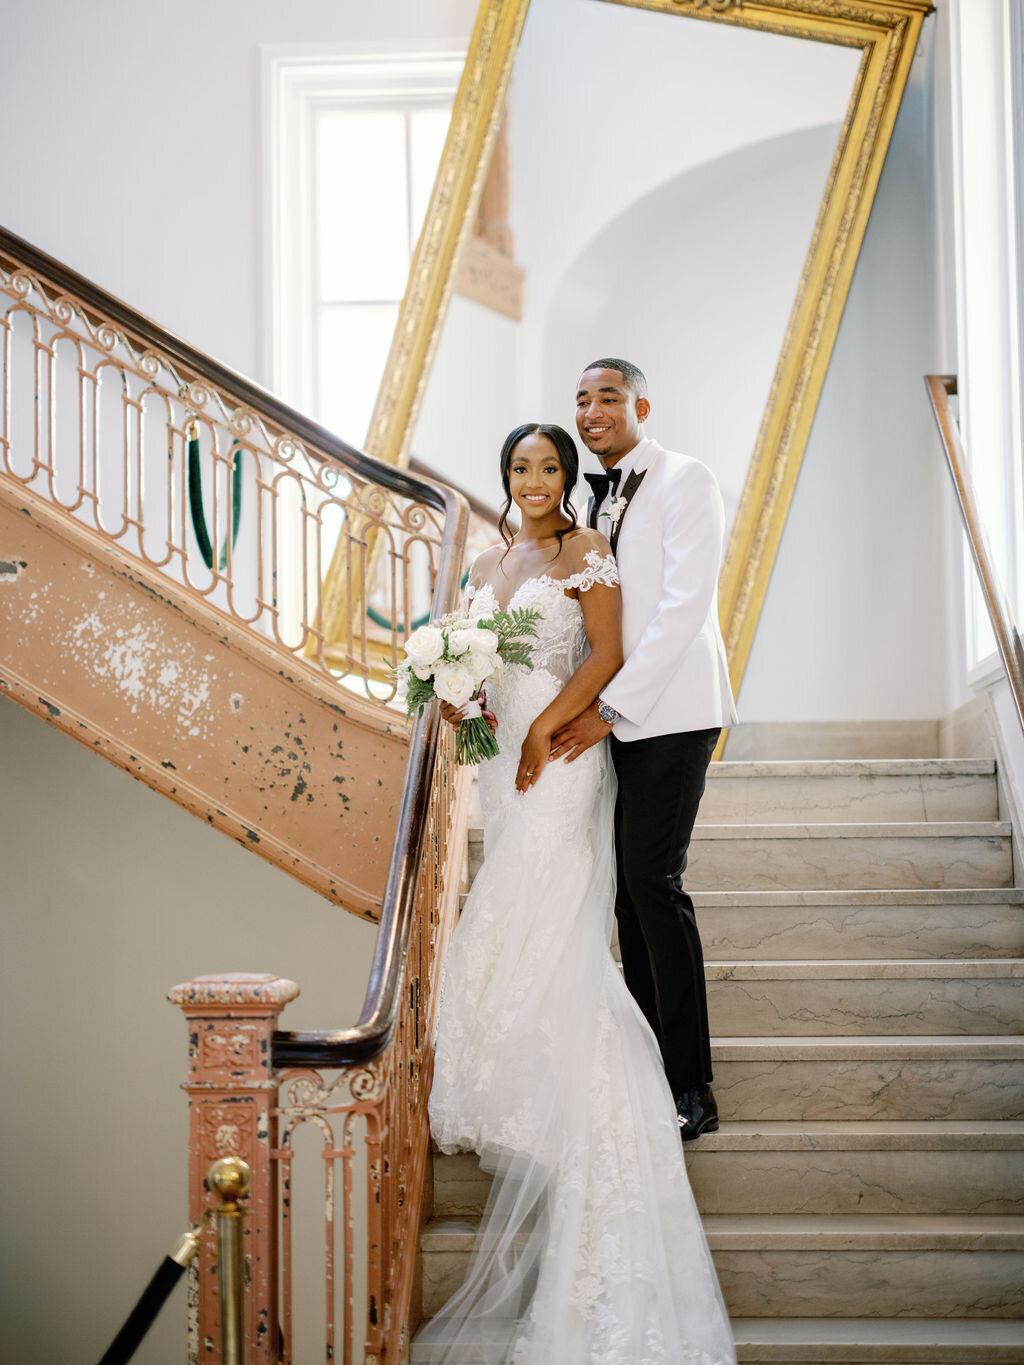 Jayne Heir Weddings and Events - Washington DC Metropolitan Area Wedding and Event Planner - Modern, Stylish, Custom, Top, Best Photo - 34